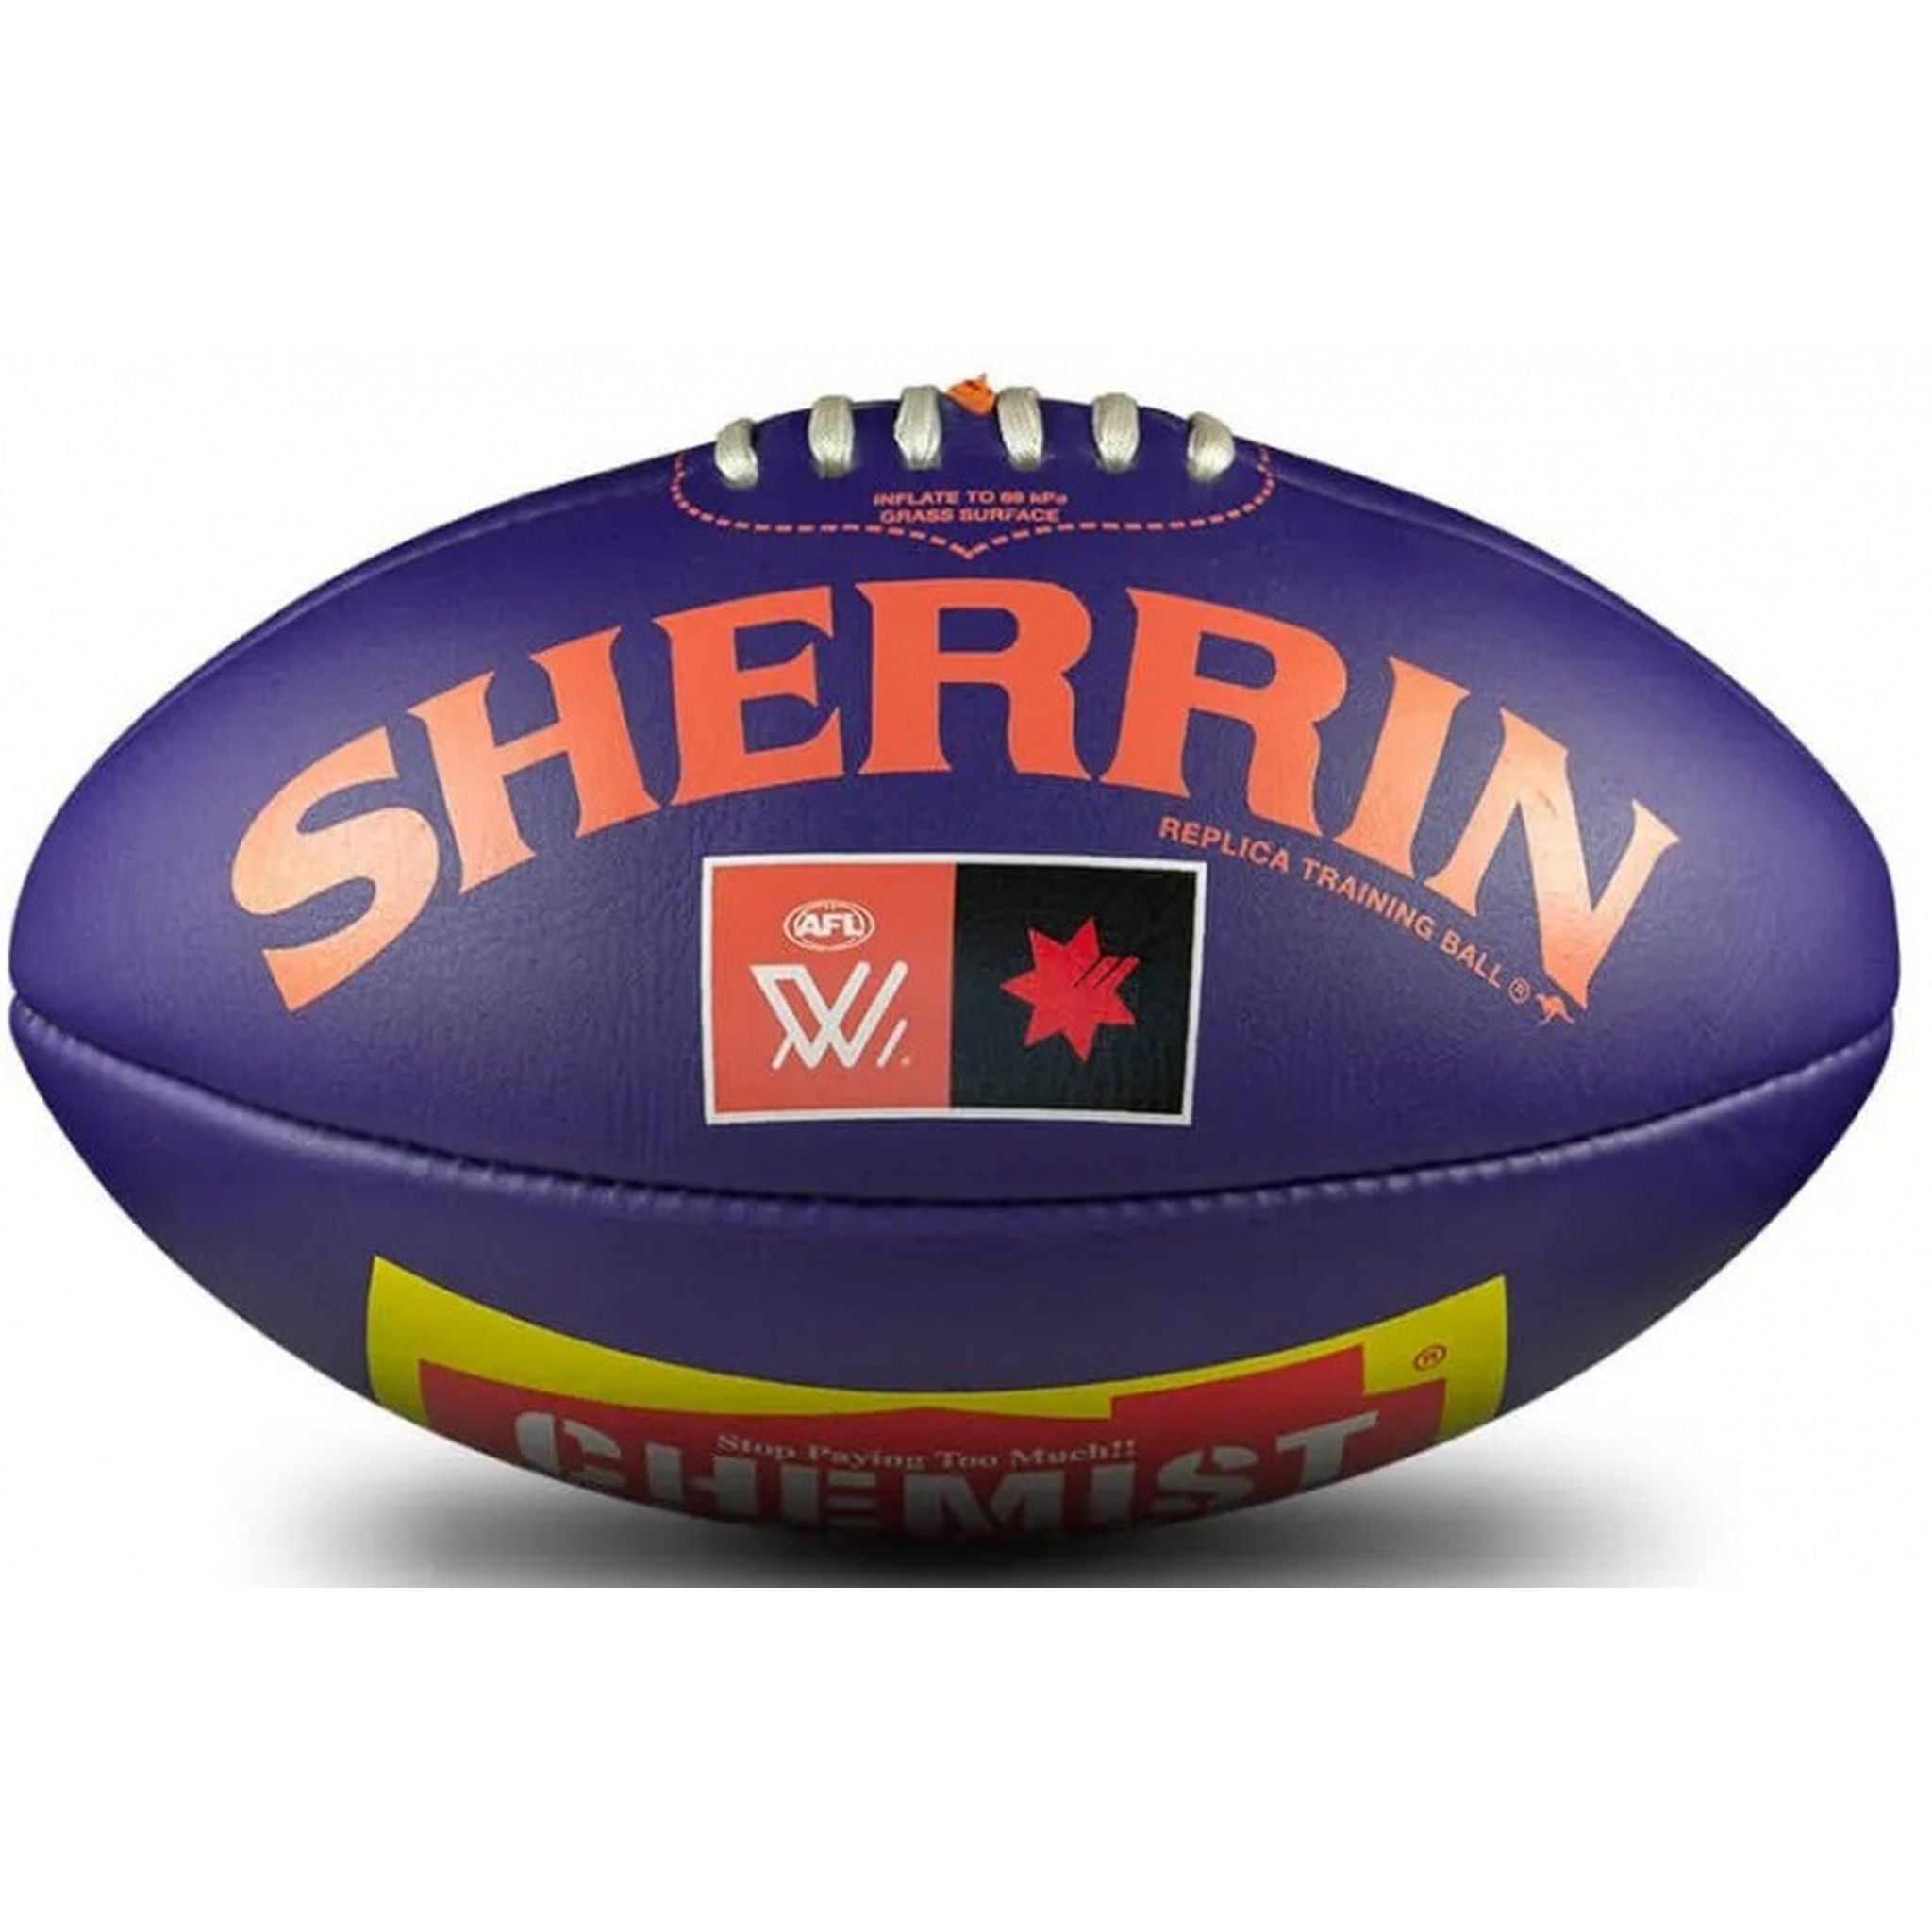 Sherrin AFLW Replica Leather Training Football